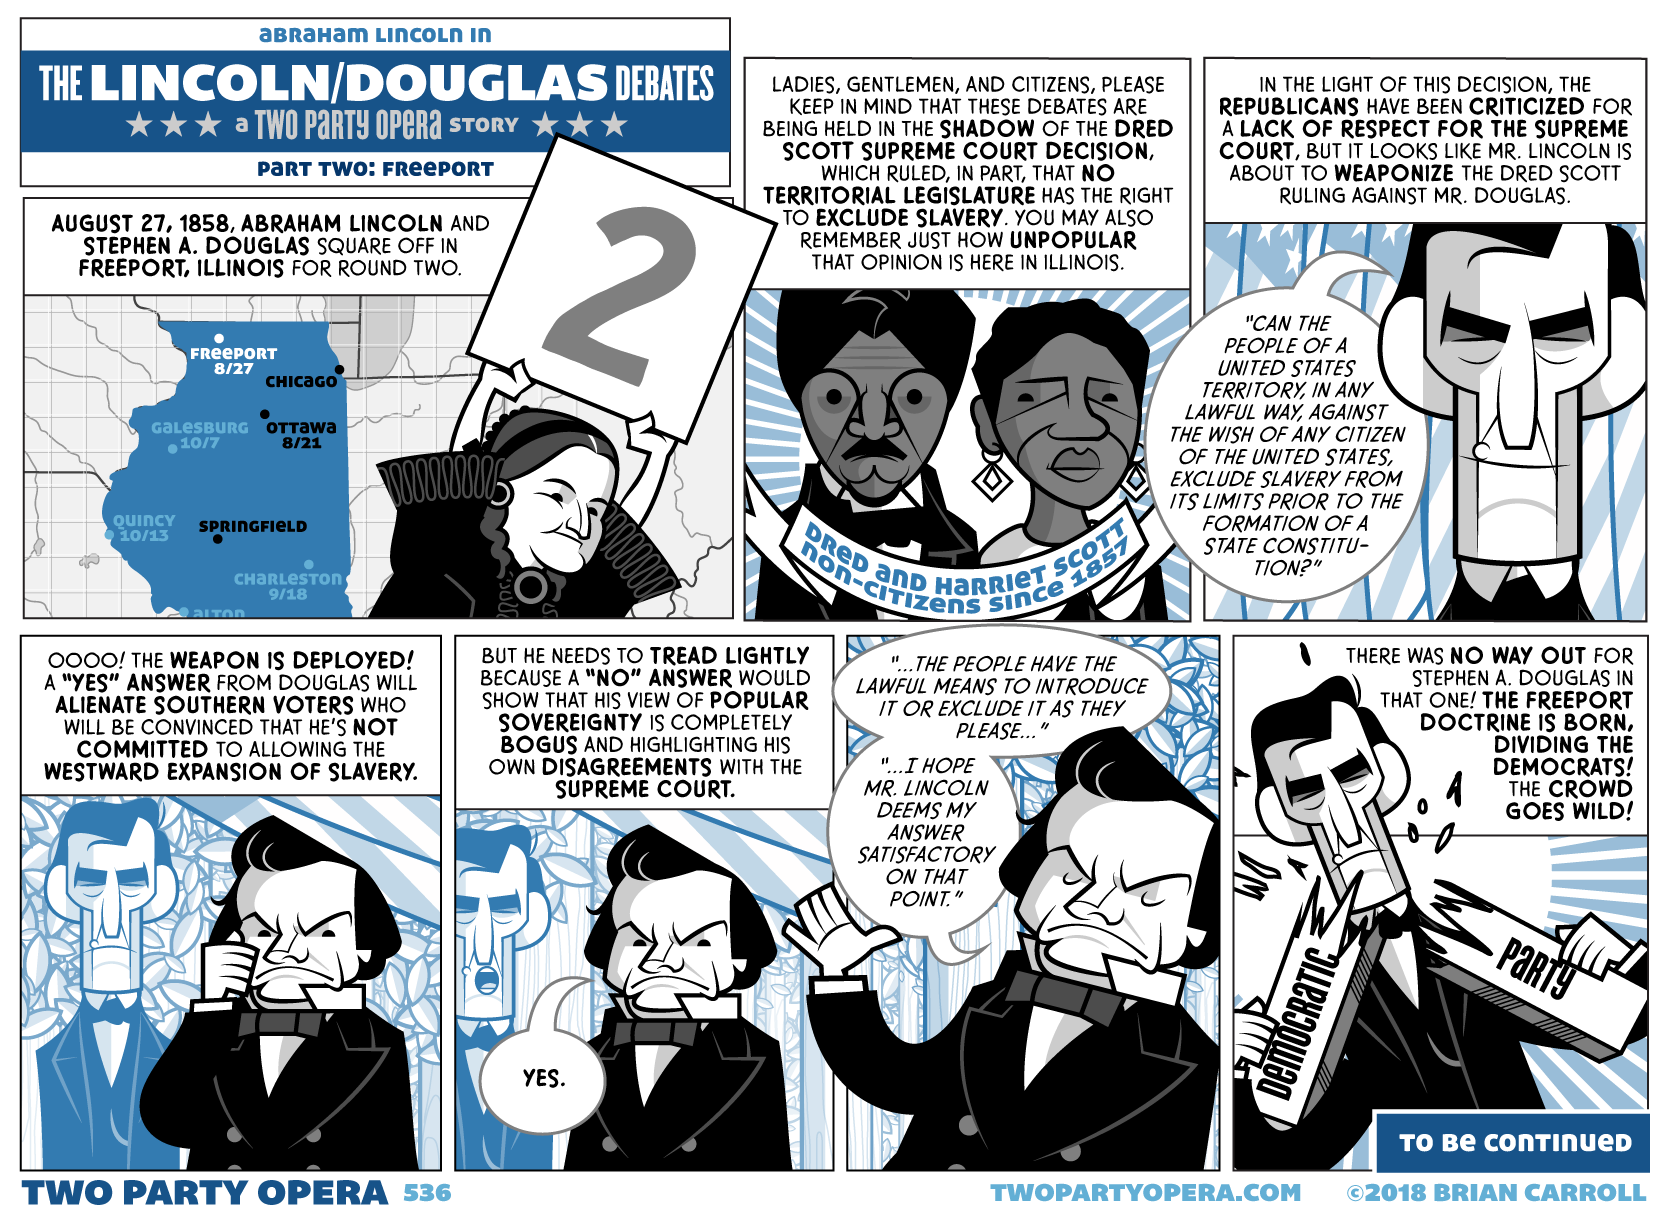 The Lincoln/Douglas Debates – Part Two: Freeport